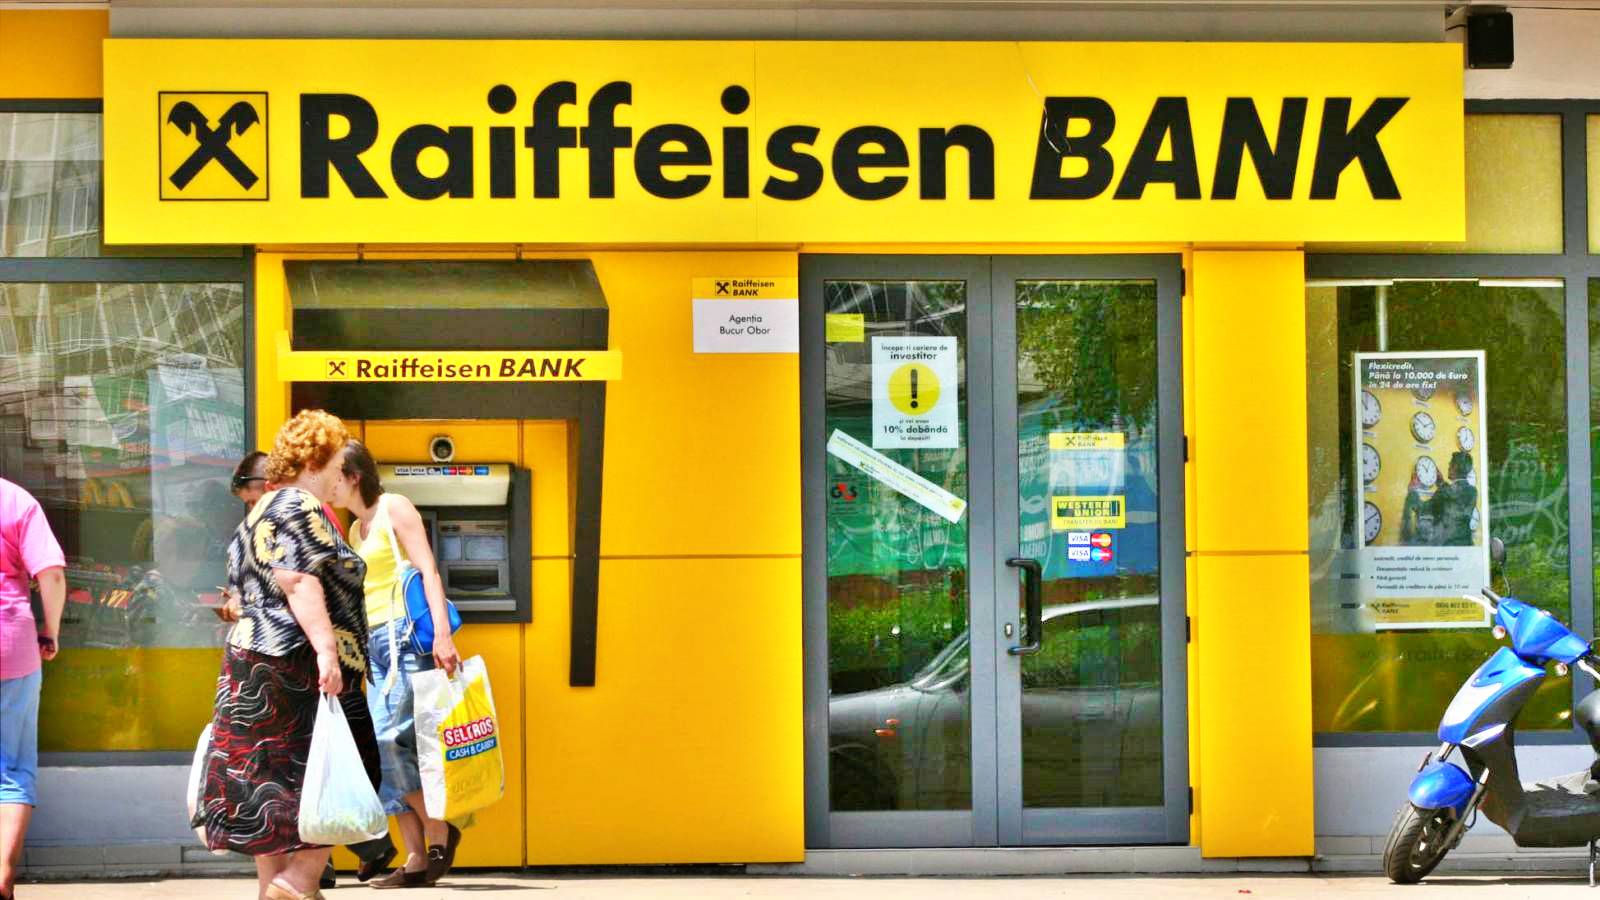 Actiunile Oficiale Raiffeisen Bank ULTIM MOMENT Afecta Clientii Romania